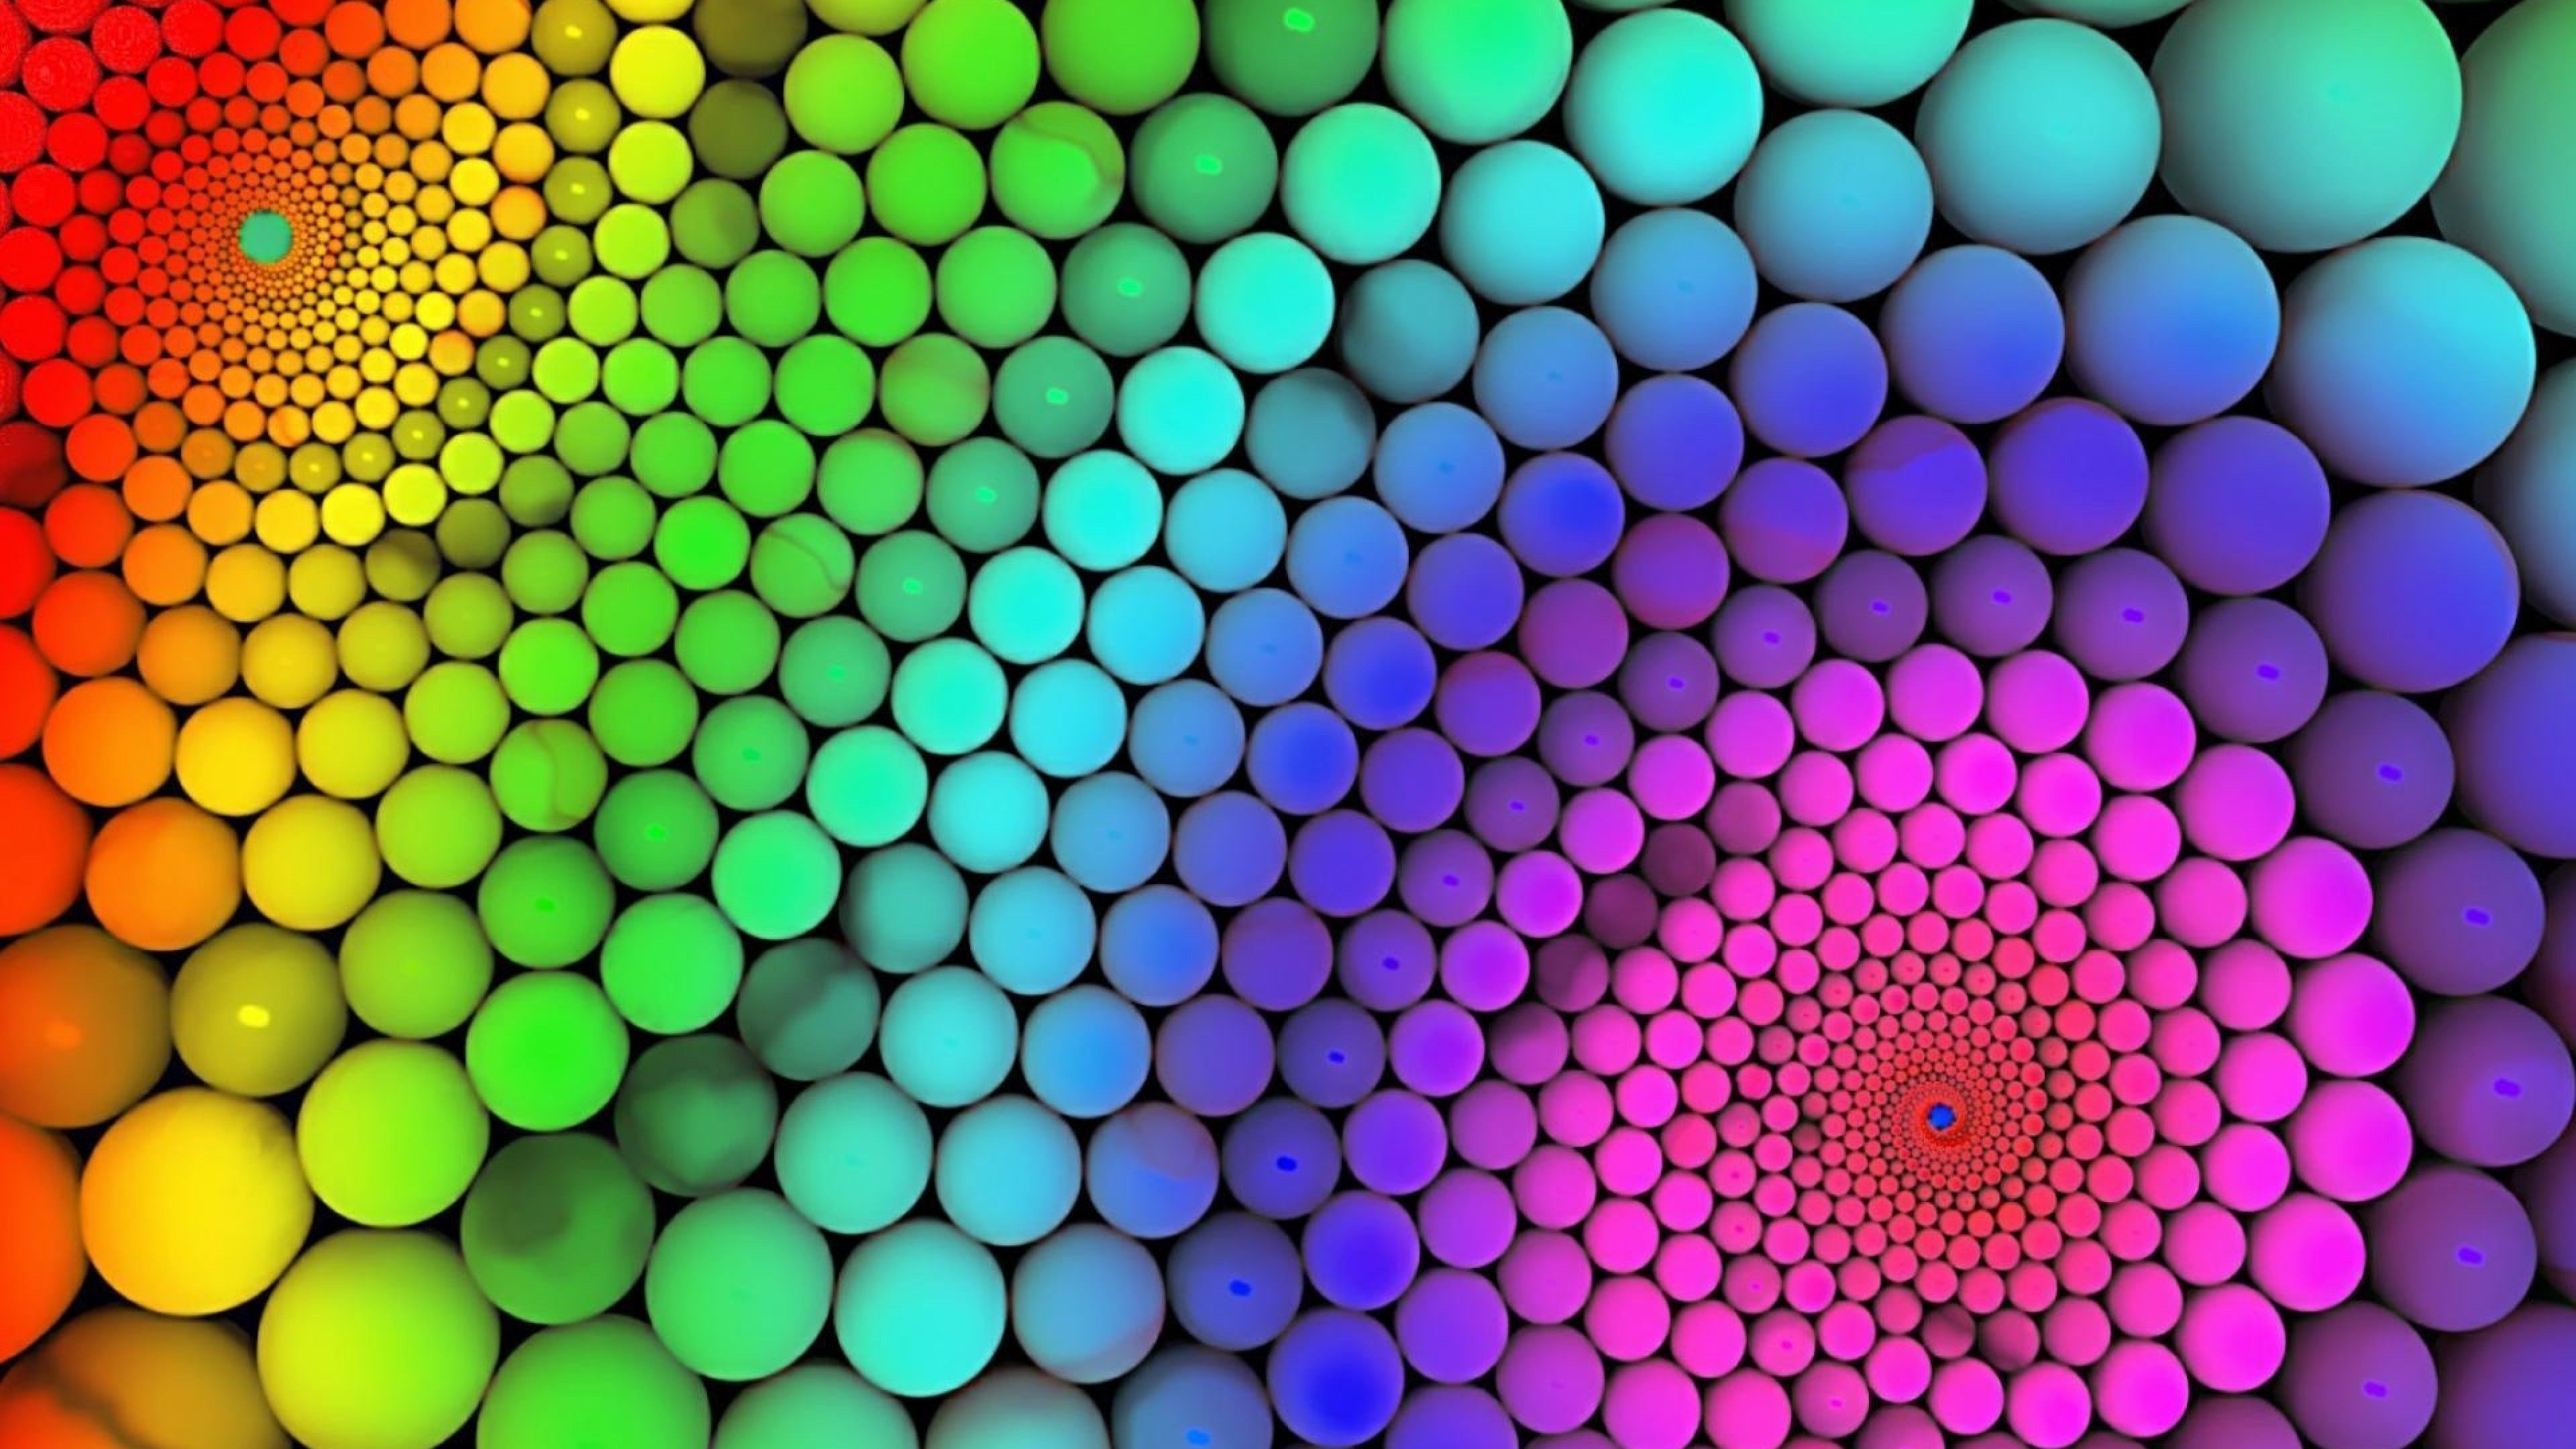 Spiral Rainbow 4K Ultra HD Wallpaper.net. Rainbow wallpaper, Rainbow bubbles, Optical illusions for kids